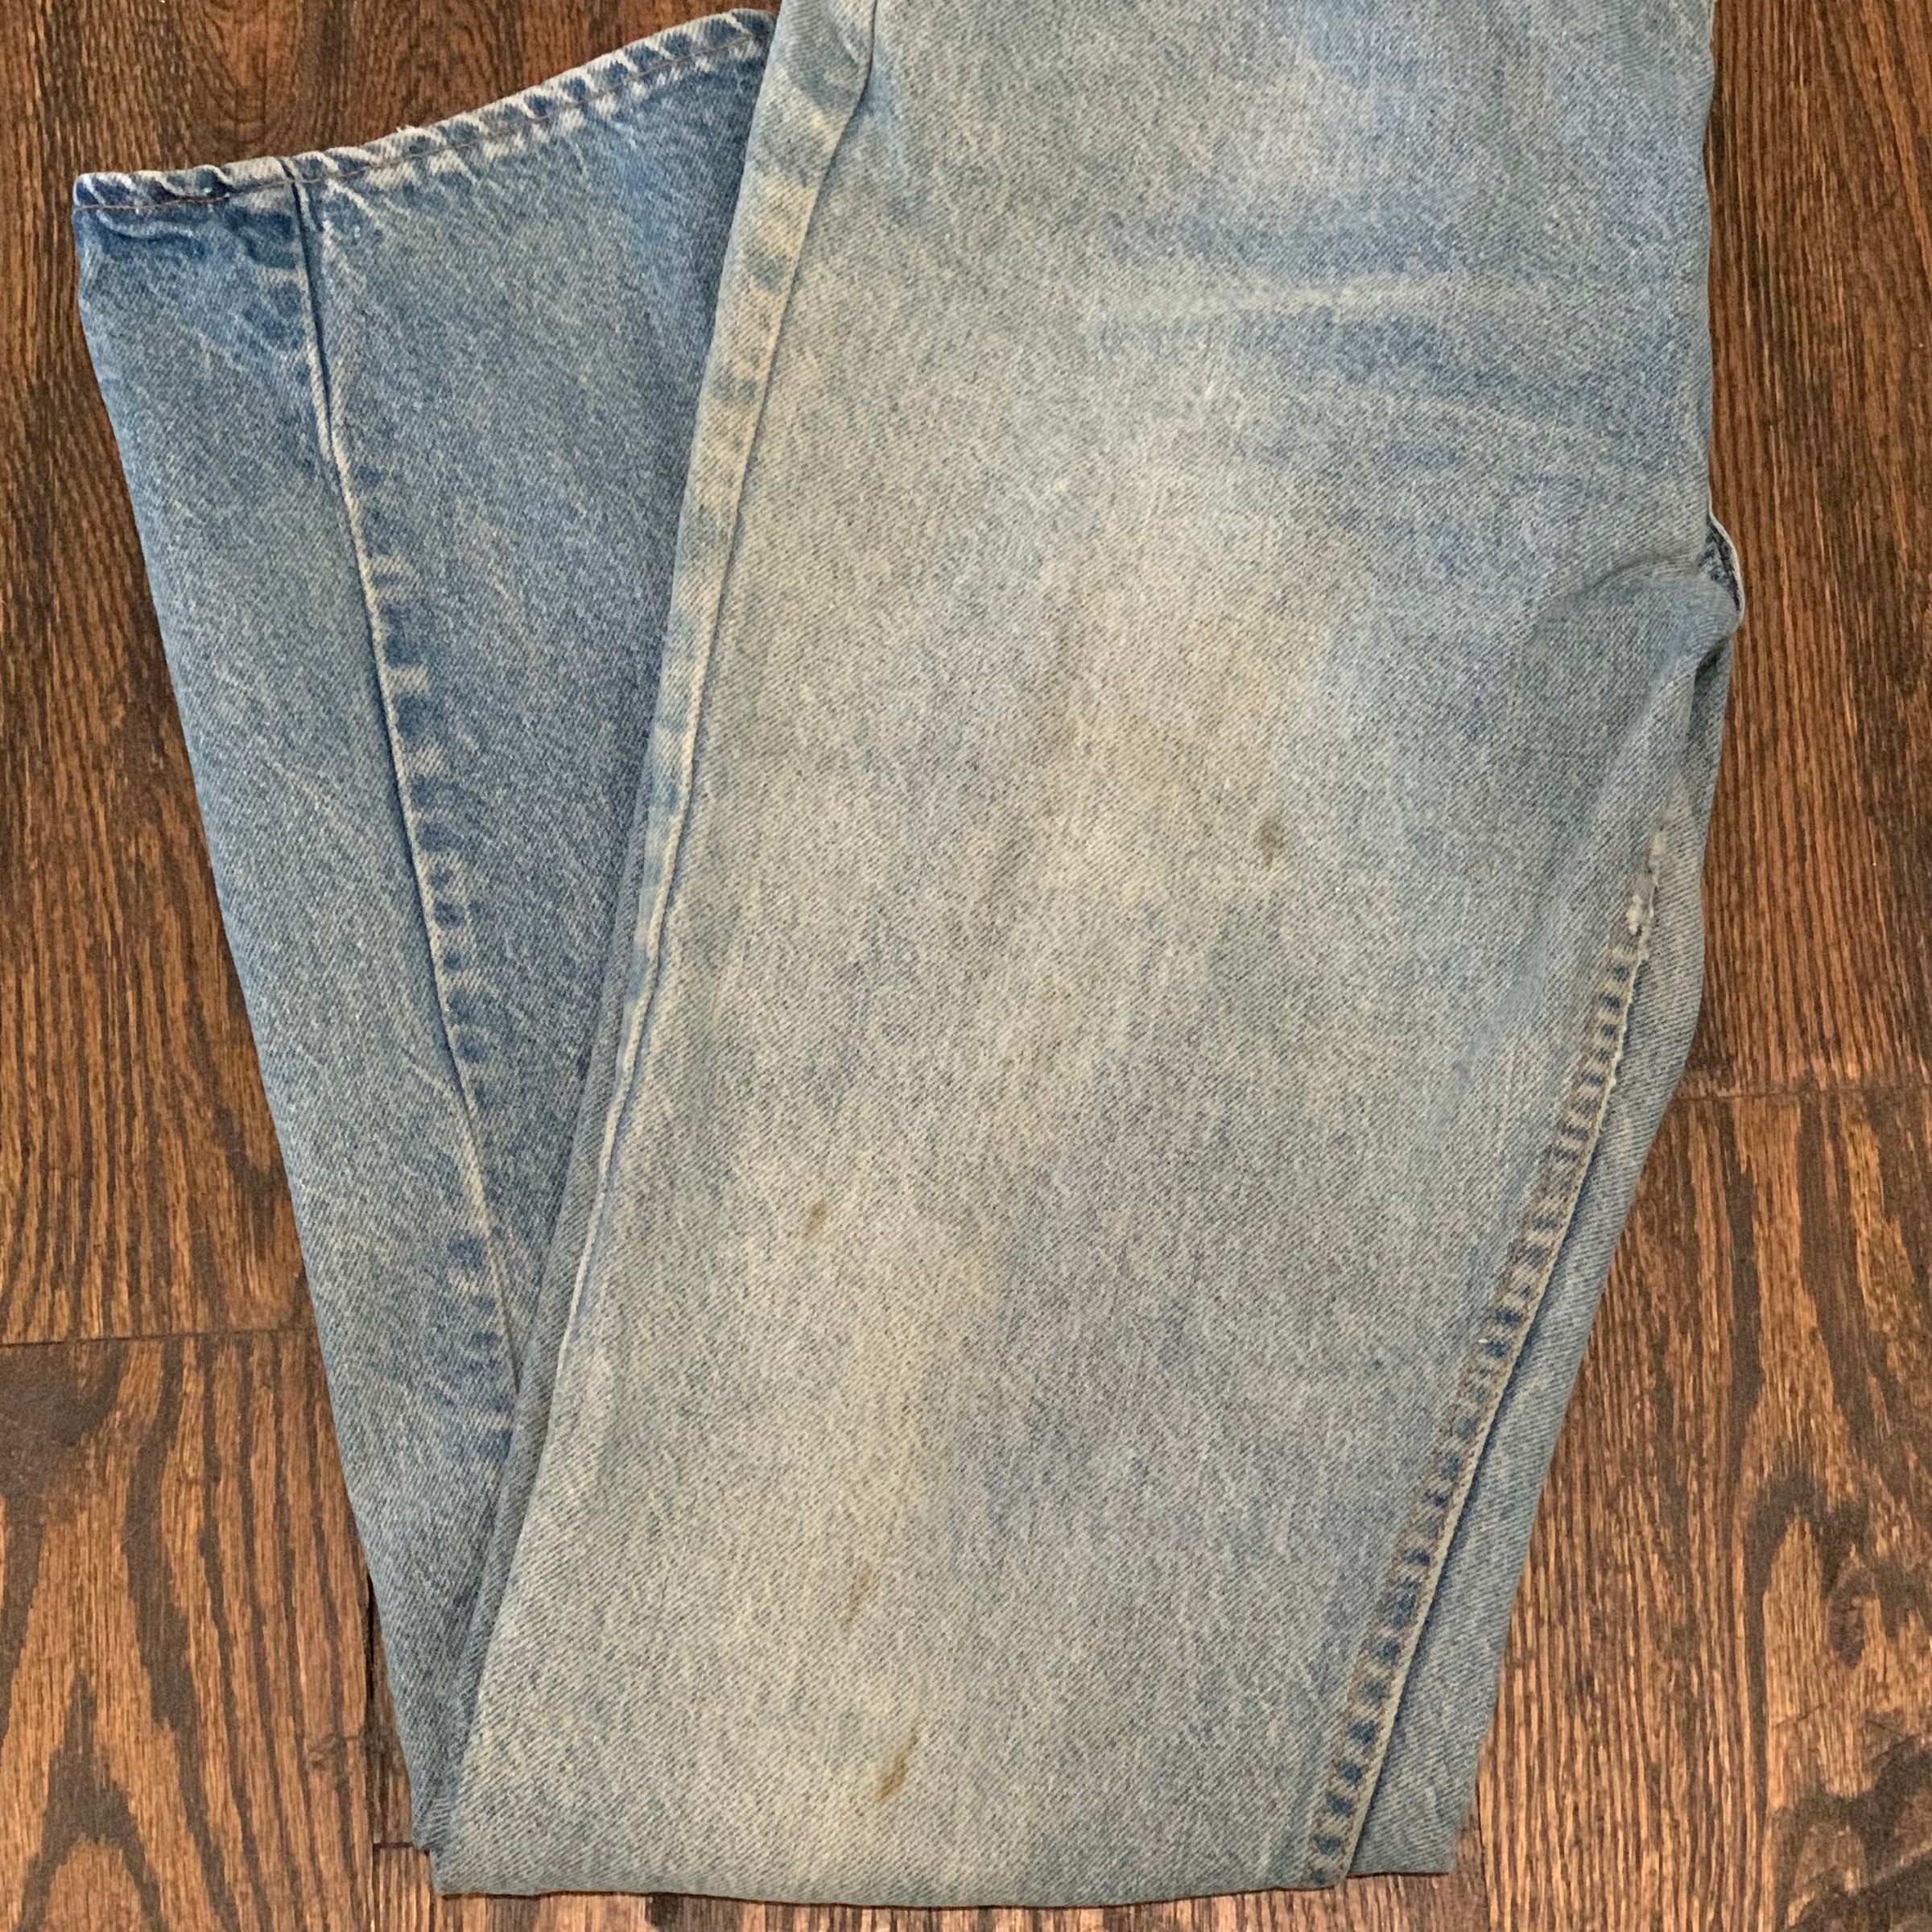 1970's Levi's Orange Tab Prospectors Denim Jeans 30" x 32"